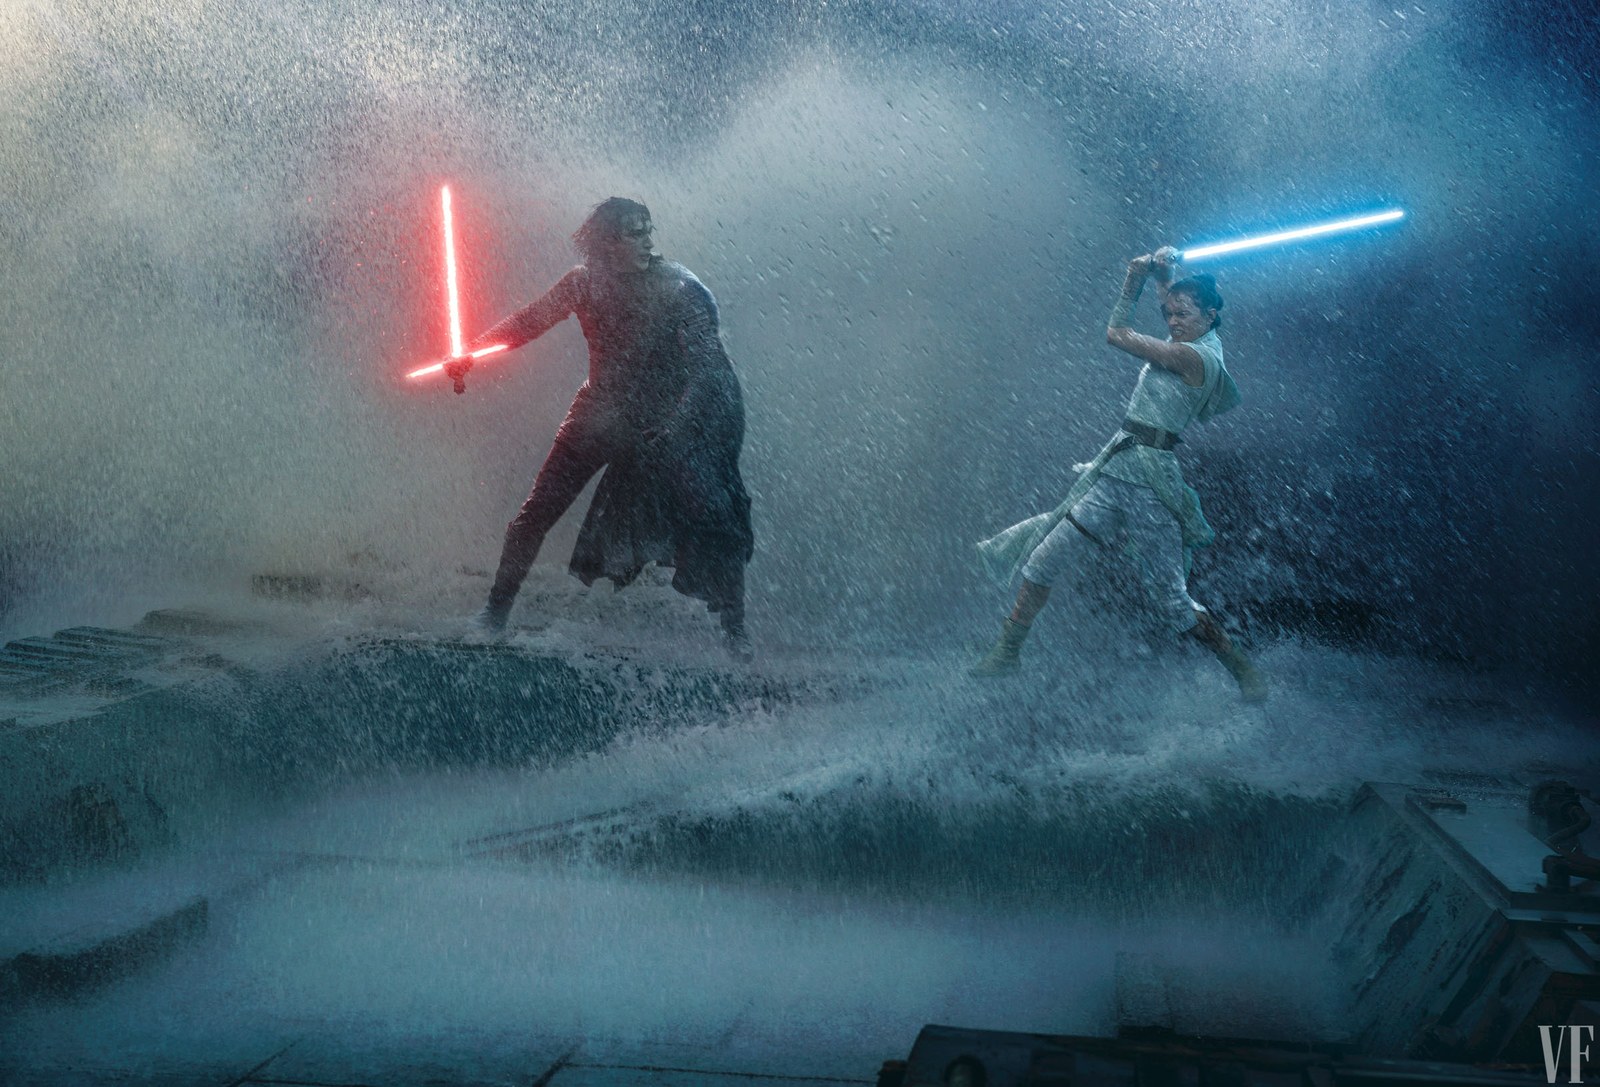 Star Wars: The Force Awakens Official Teaser #2 